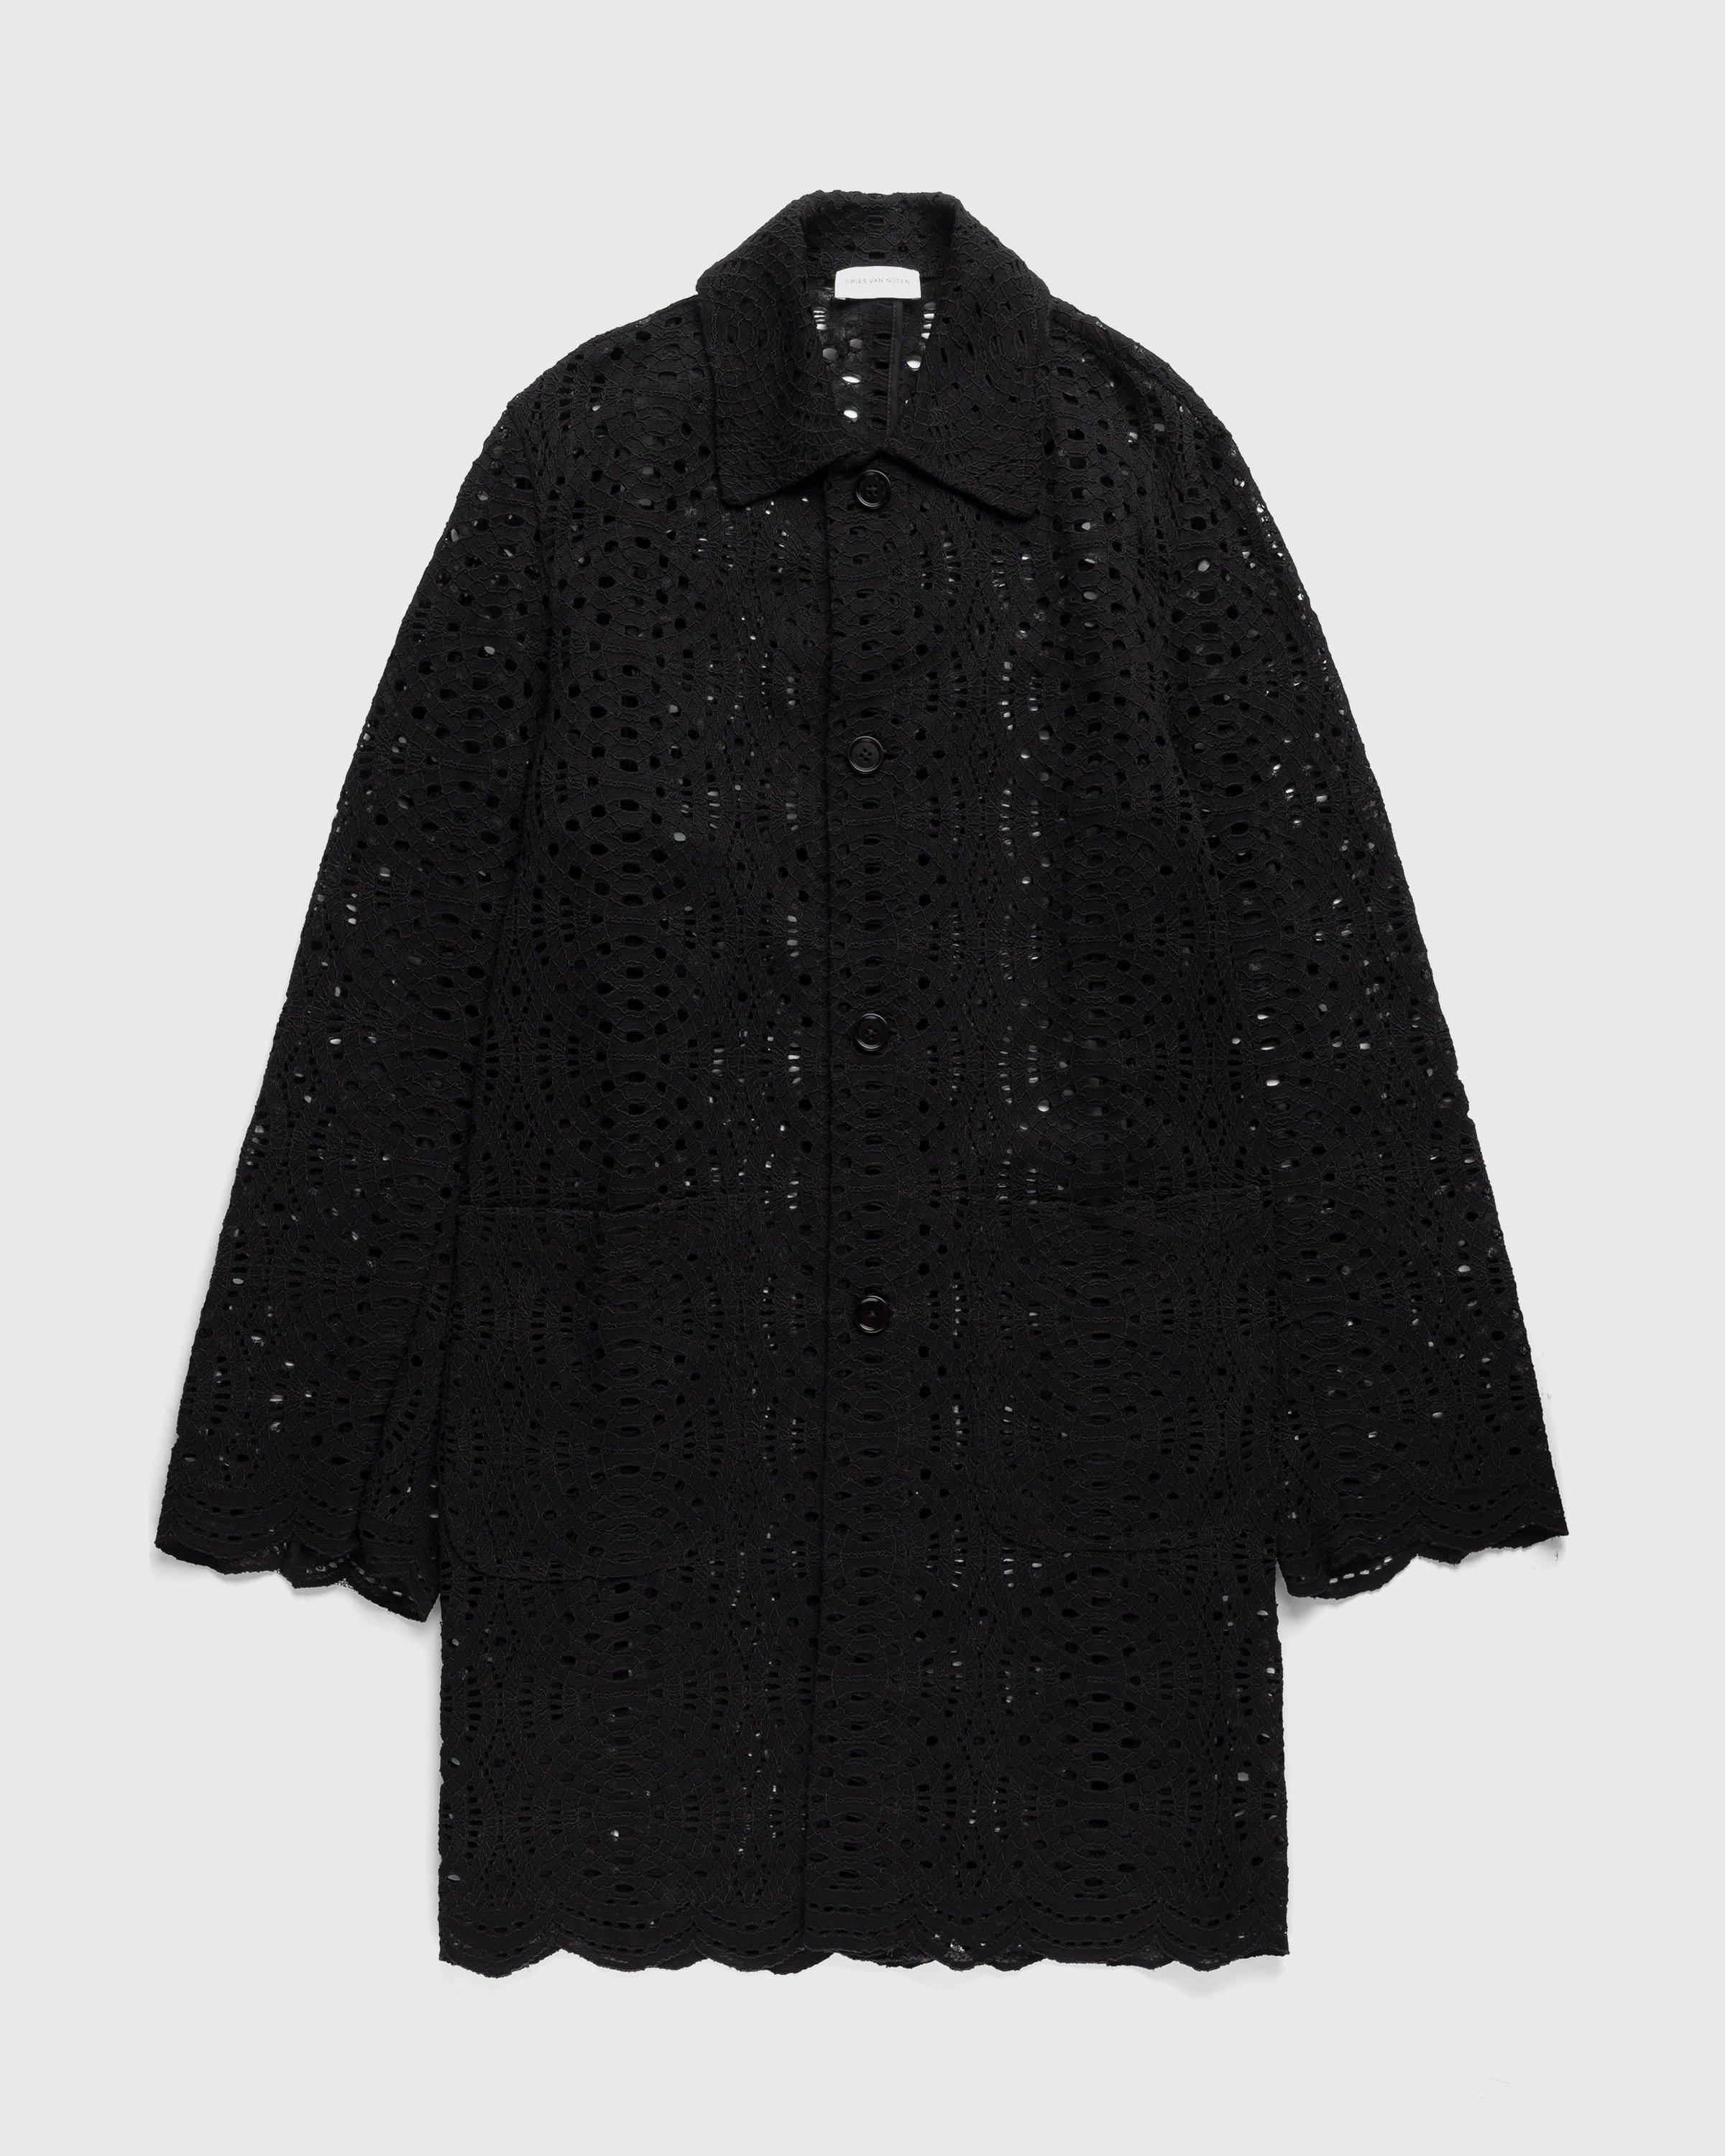 Dries van Noten - RAKIN COAT - Clothing - Black - Image 1